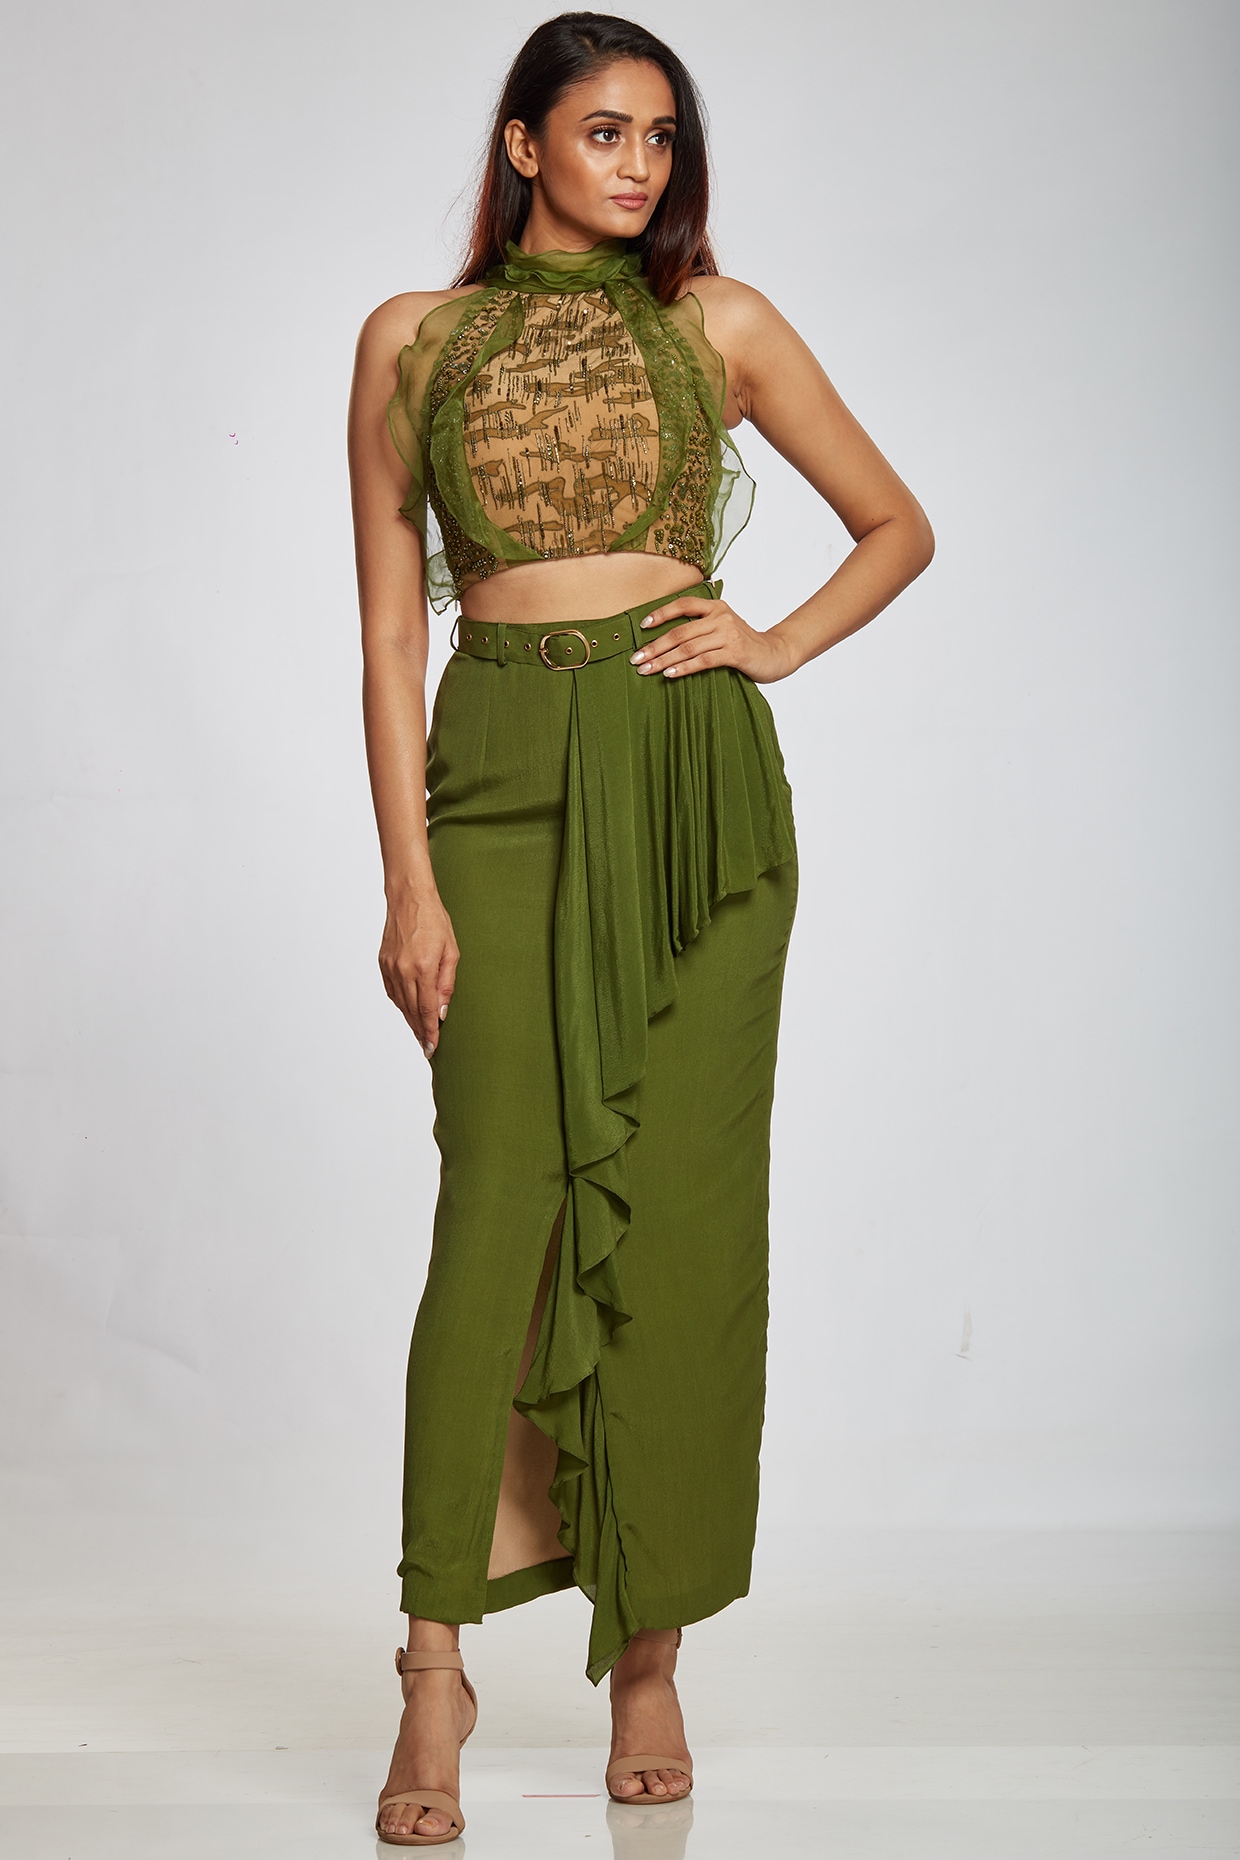 KRIDHAMA Women Crop Top Skirt Set - Buy KRIDHAMA Women Crop Top Skirt Set  Online at Best Prices in India | Flipkart.com